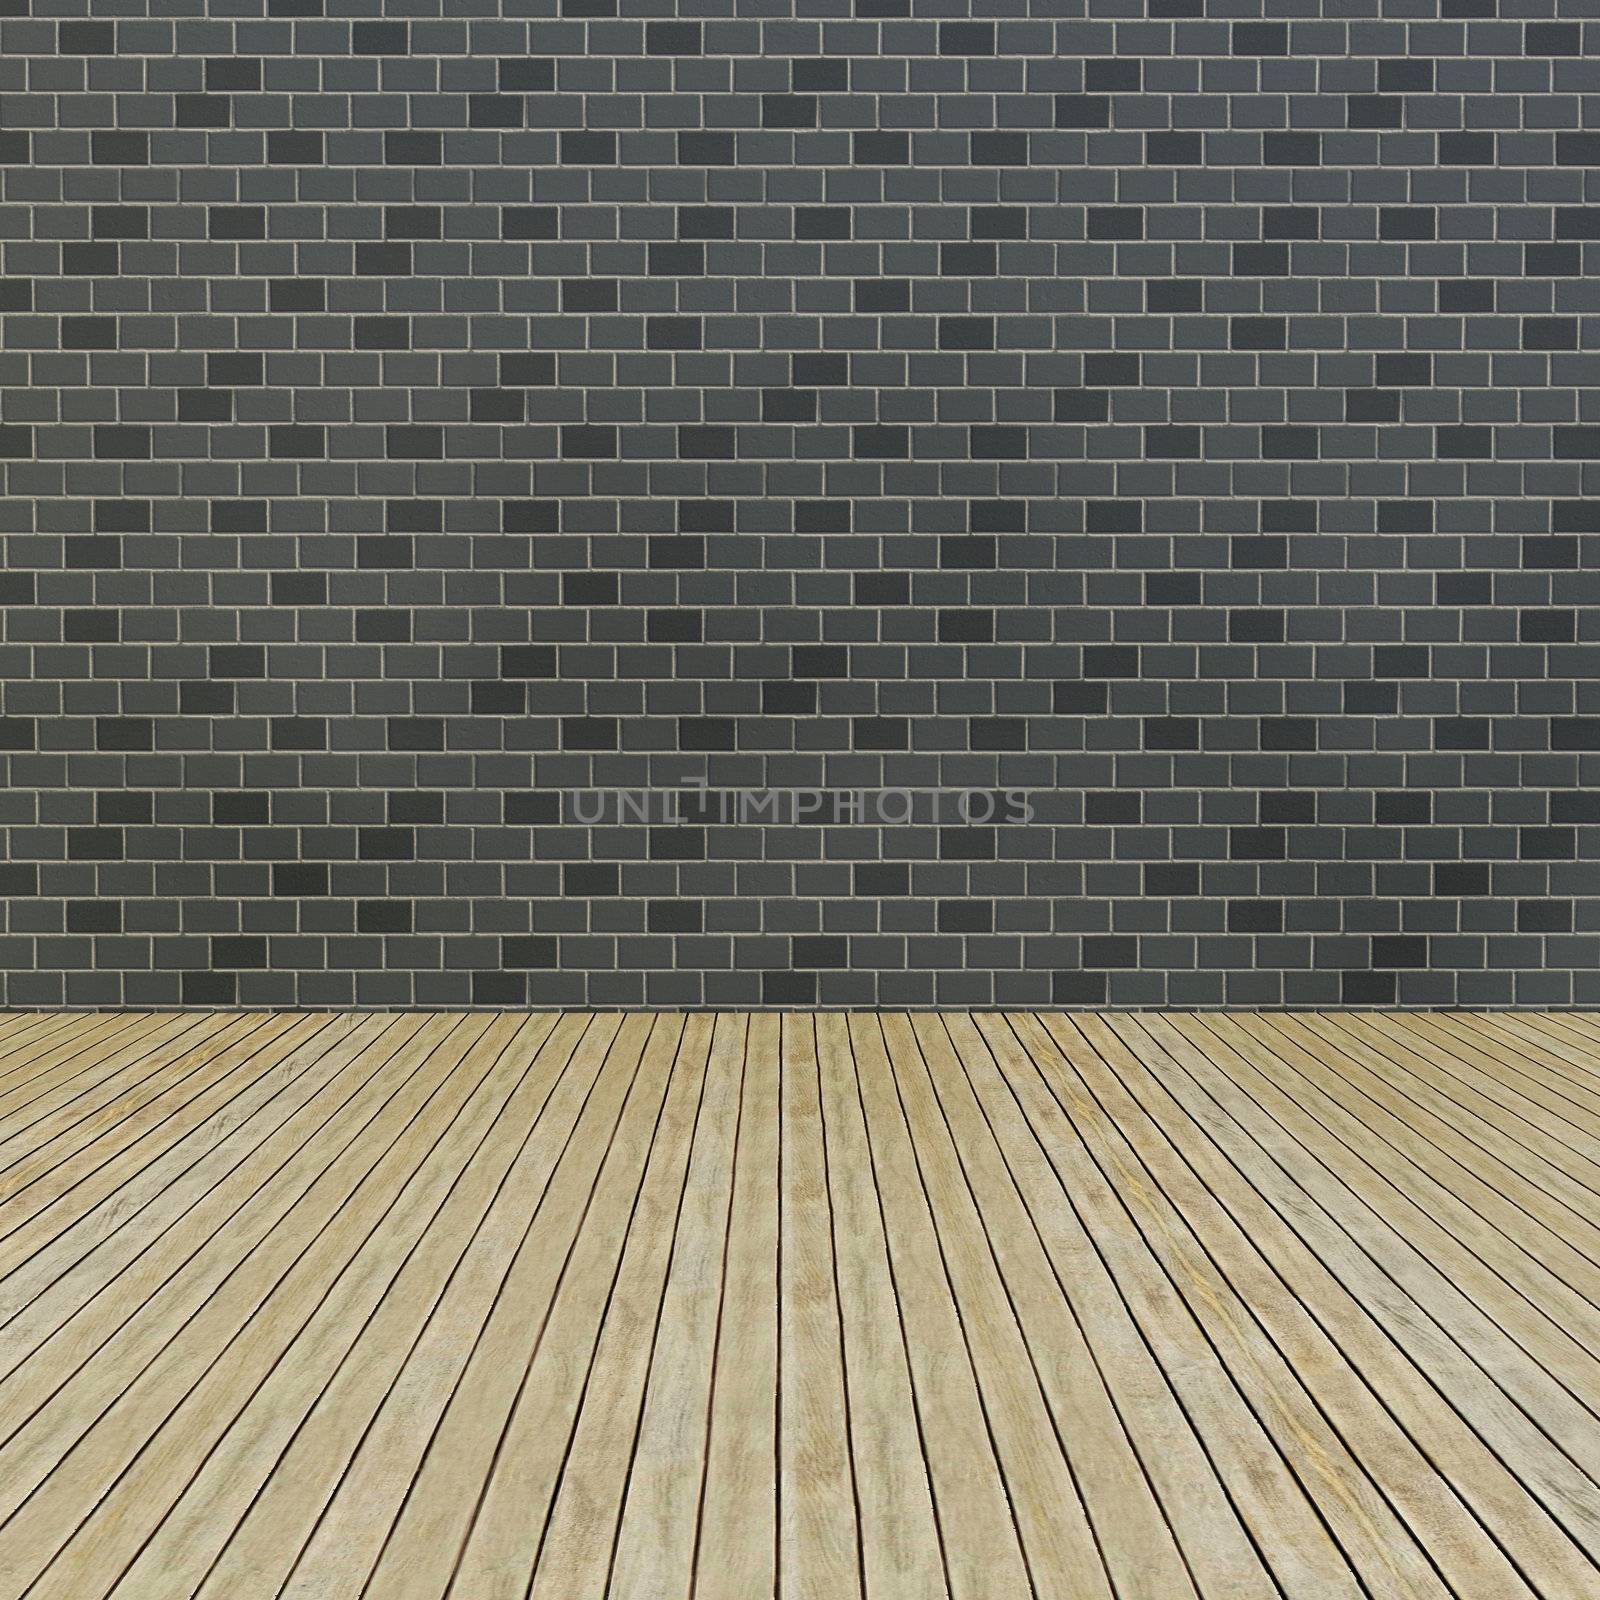 Wood floor and pattern brick wall by siraanamwong